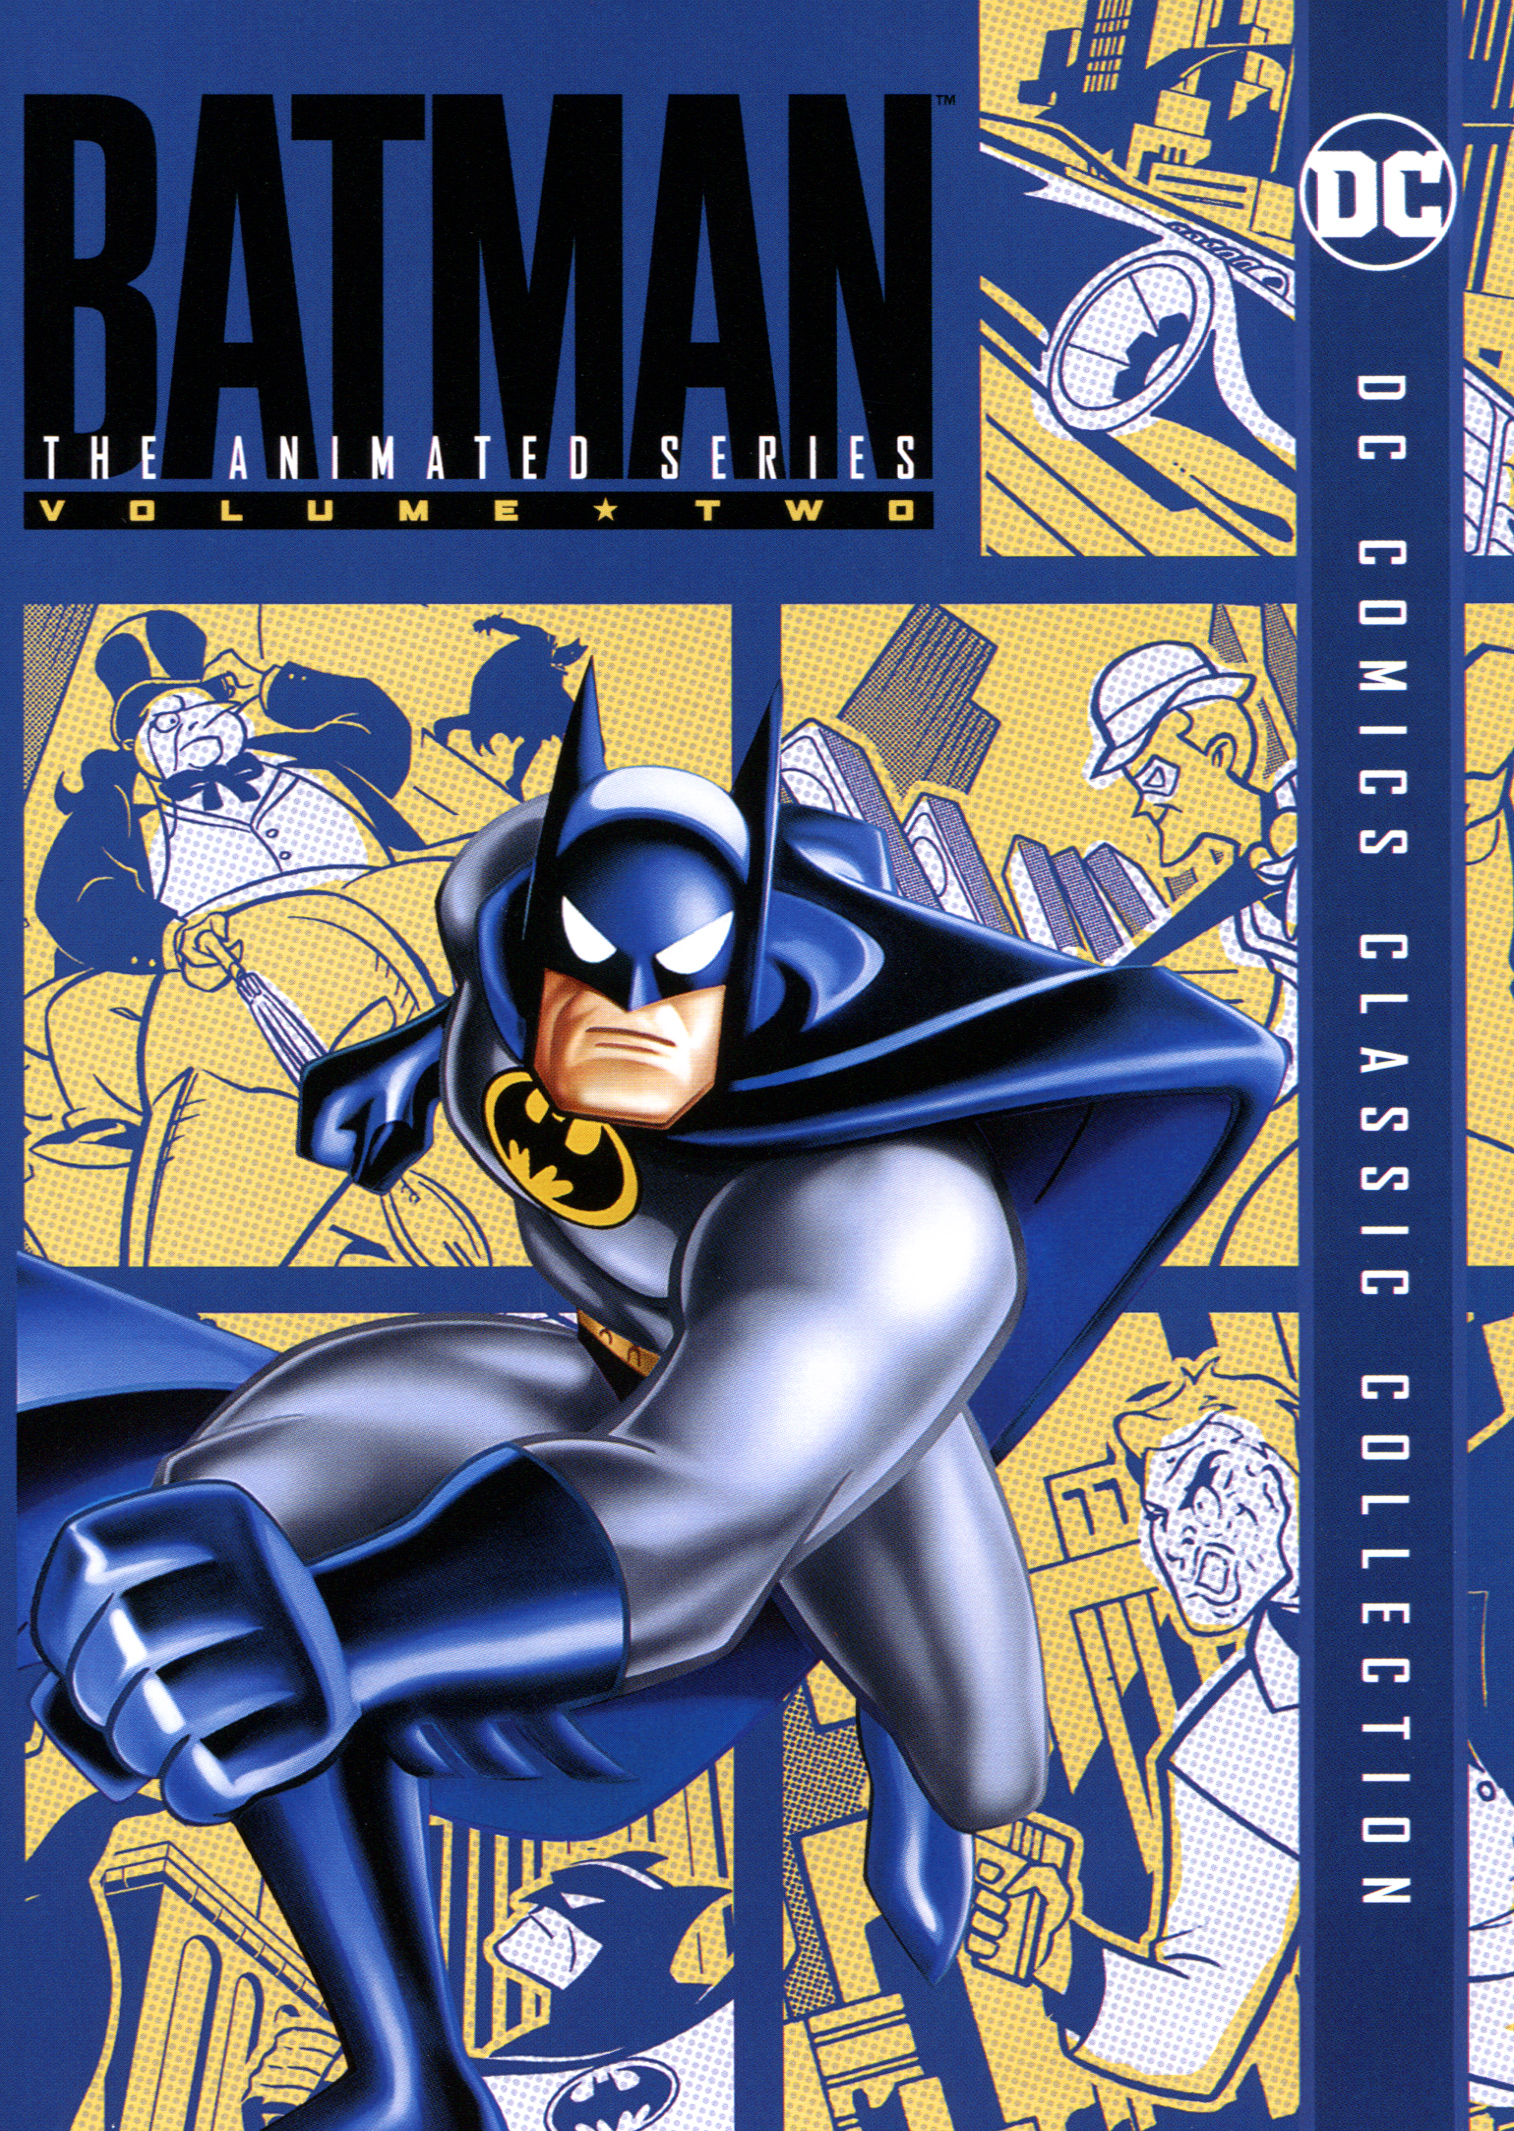 Batman: The Animated Series Vol. 2 [1993] - Best Buy